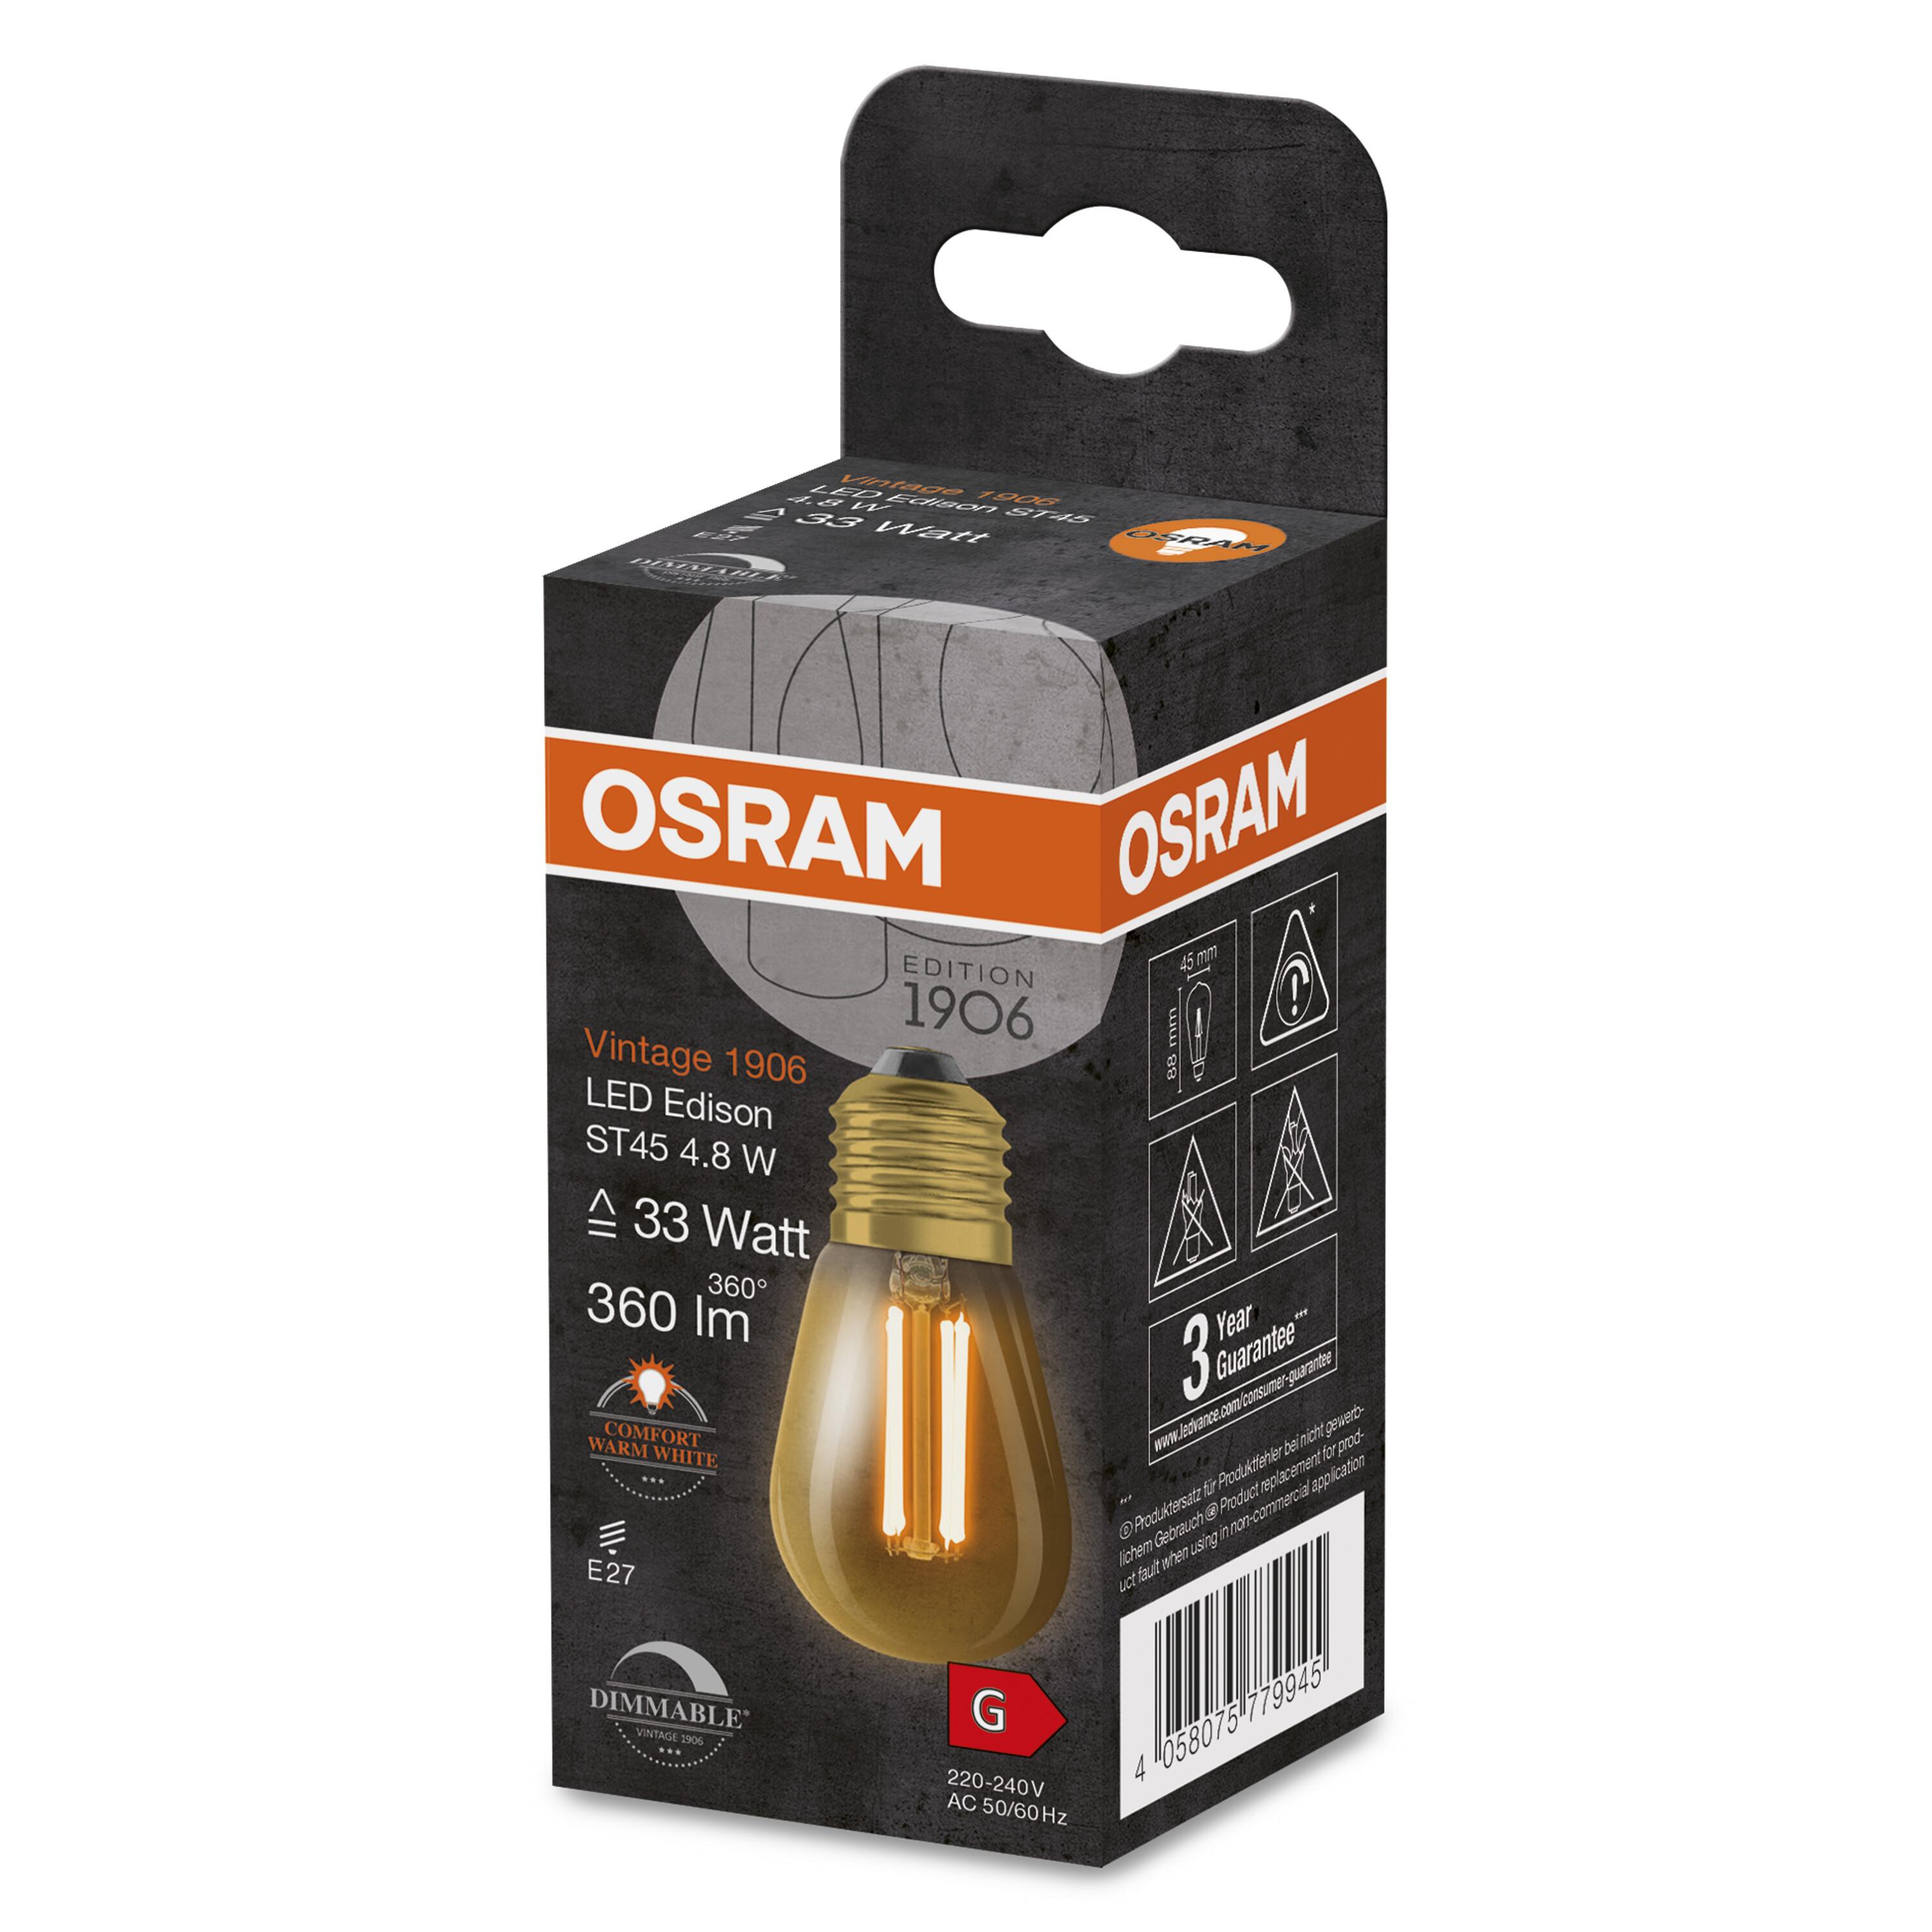 OSRAM  Vintage 1906 LED Warmweiß DIM LED Lampe Lumen 360